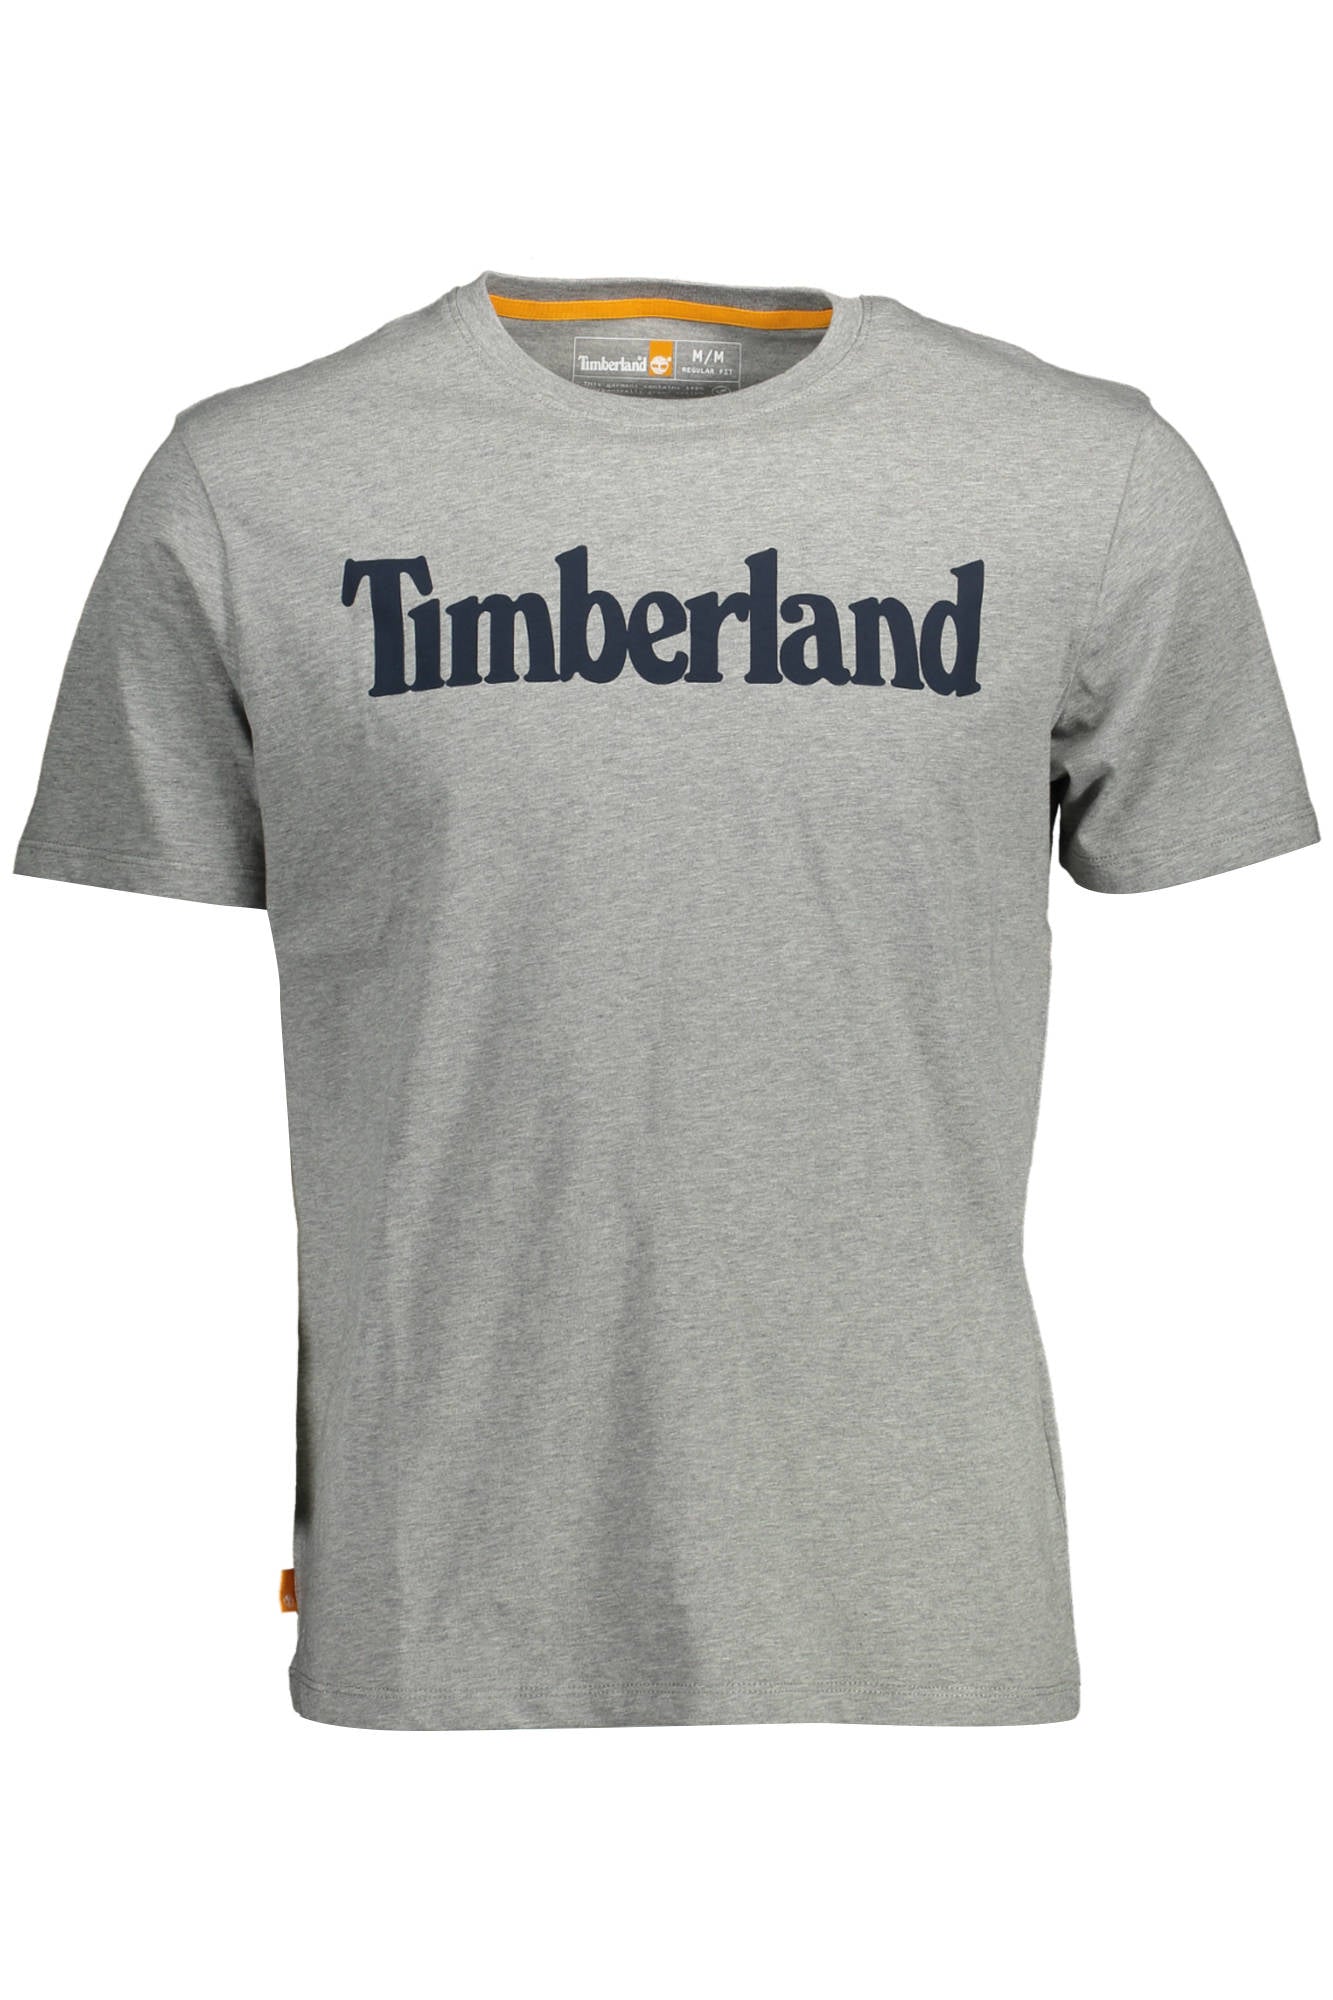 Timberland Gray T-Shirt - Fizigo